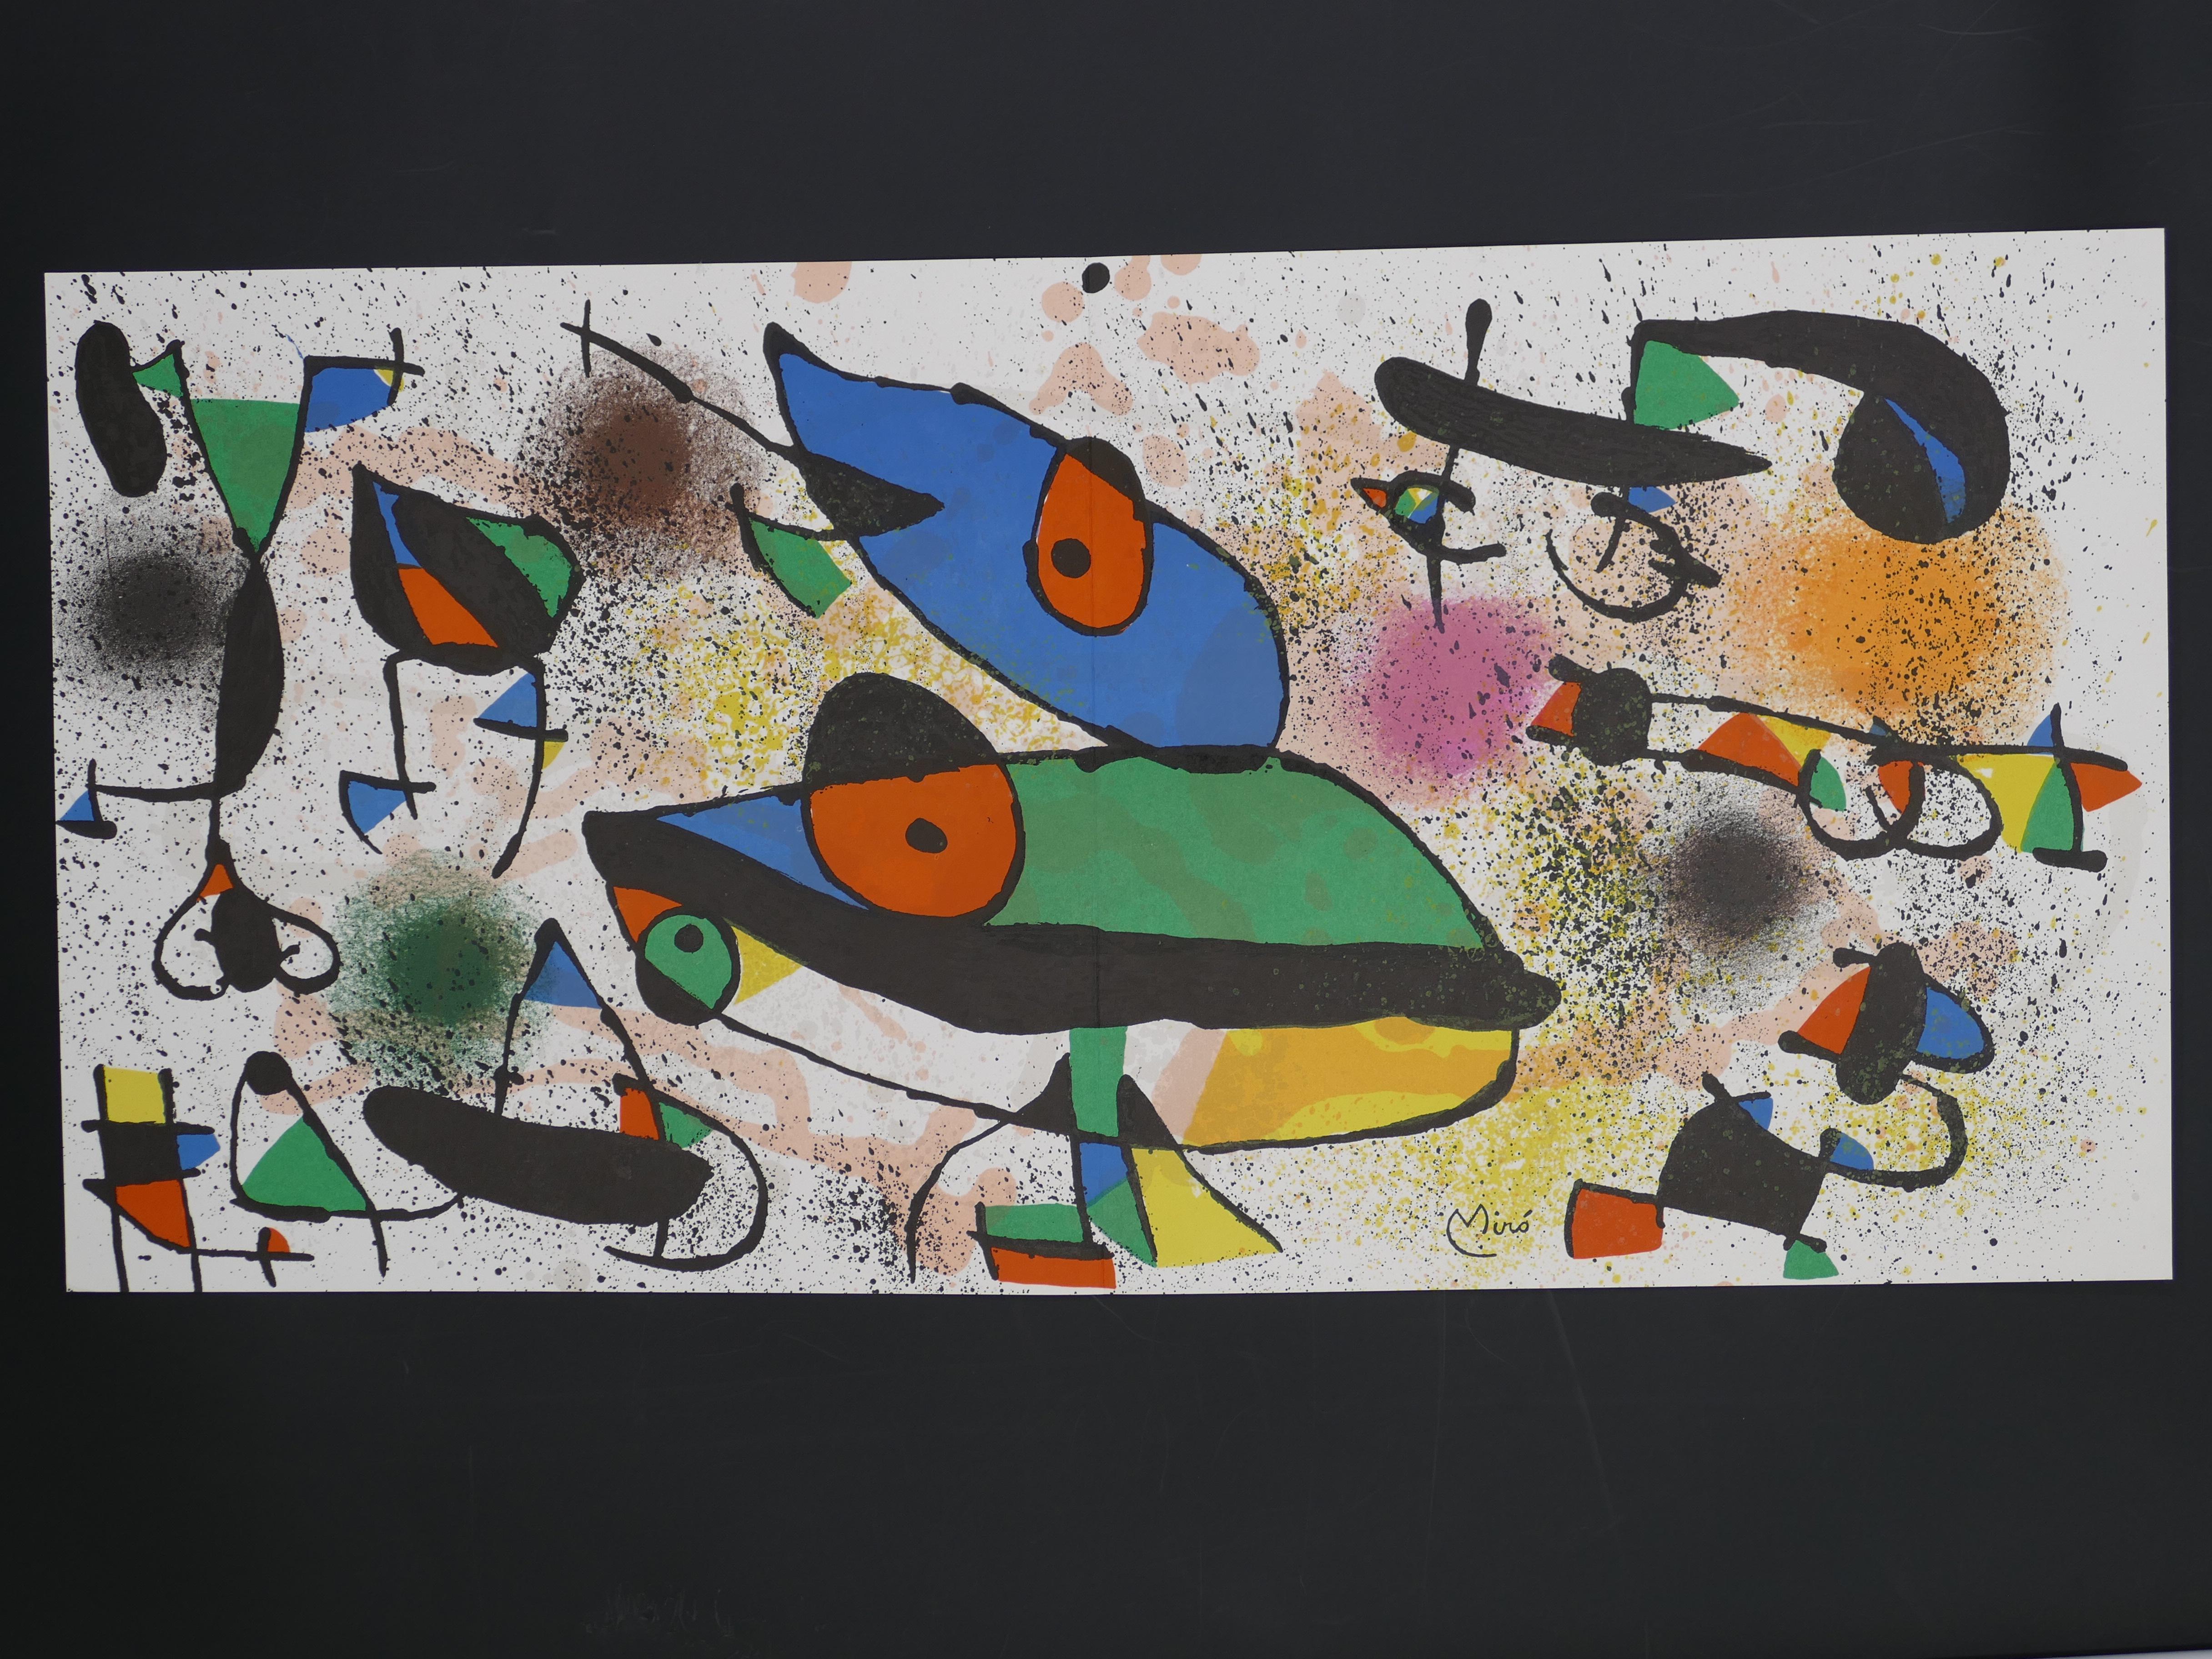 Sculptures - Original Lithograph by Joan Mirò - 1974 - Surrealist Print by Joan Miró